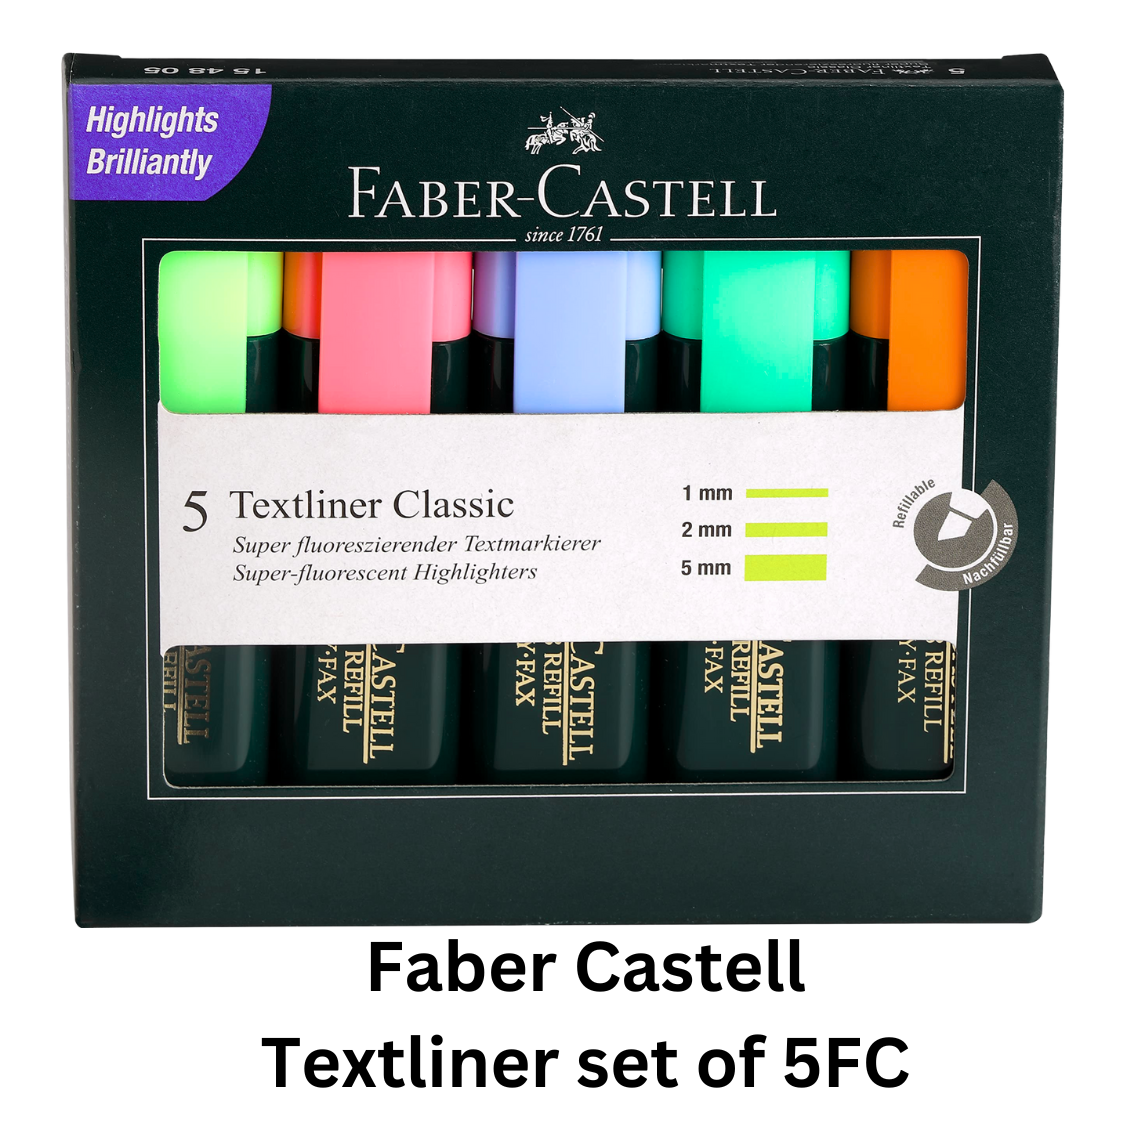 Faber Castell Textliner set of 5FC